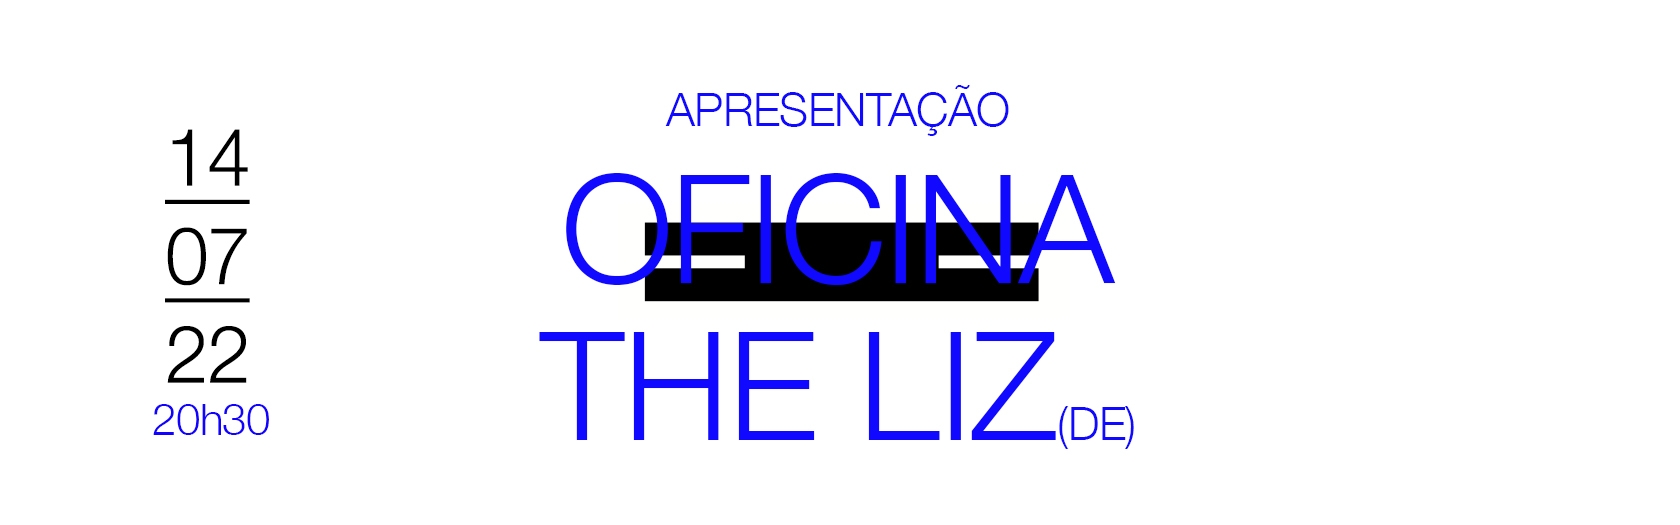 R_9_Flyer Oficina The Liz